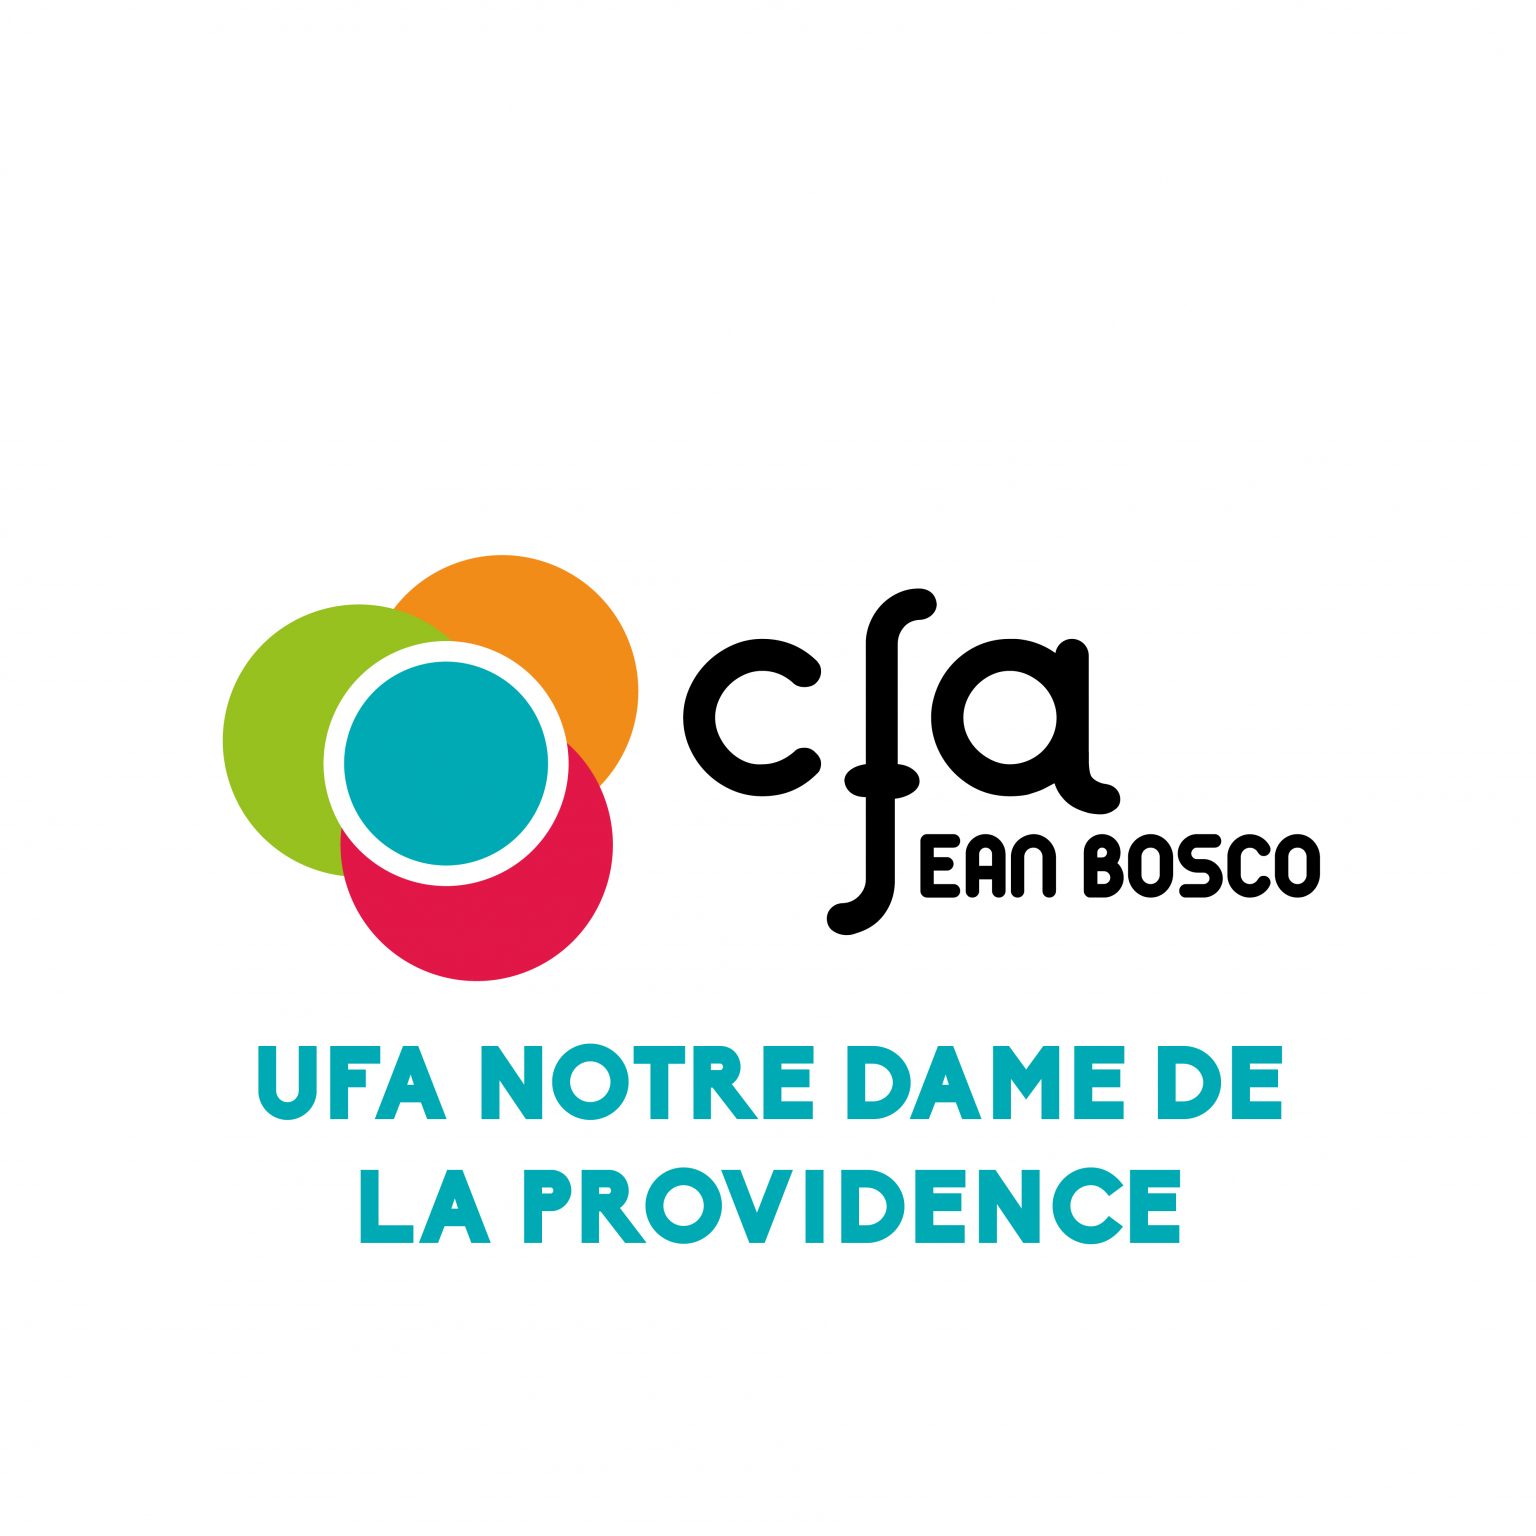 UFA NOTRE DAME DE LA PROVIDENCE  CFA